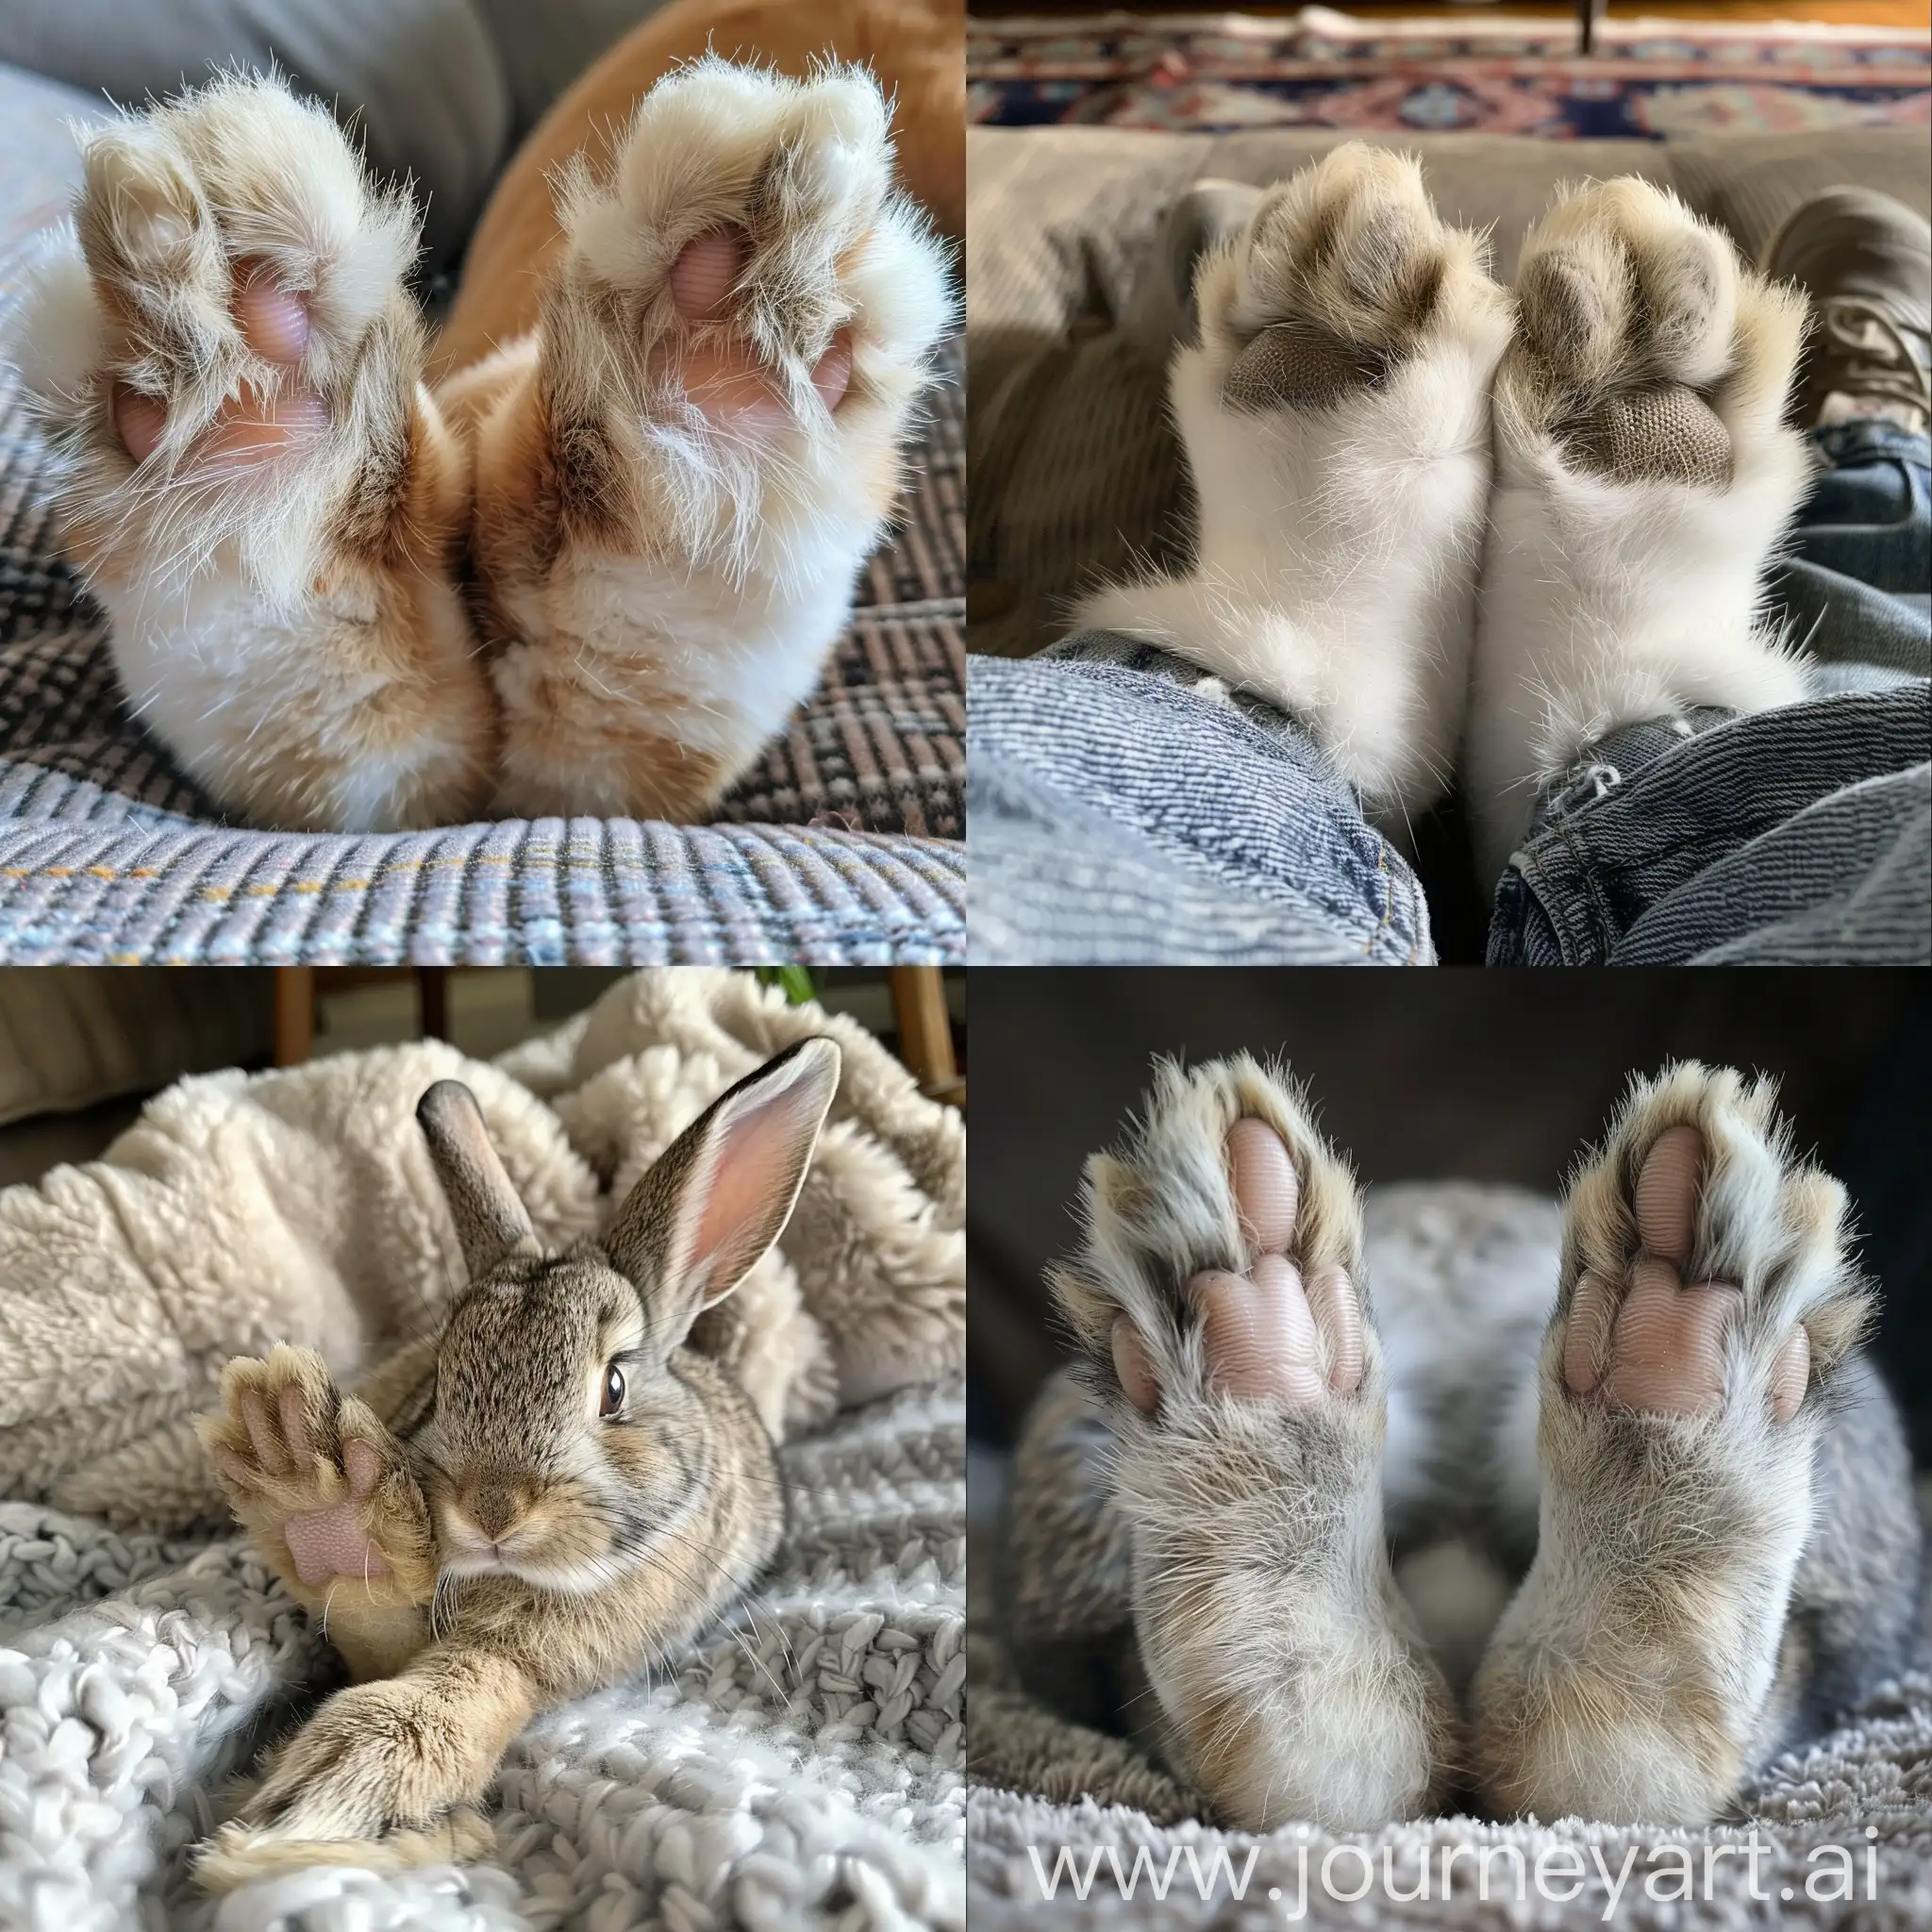 Jessica-Rabbit-Feet-in-a-Vibrant-Surreal-Setting